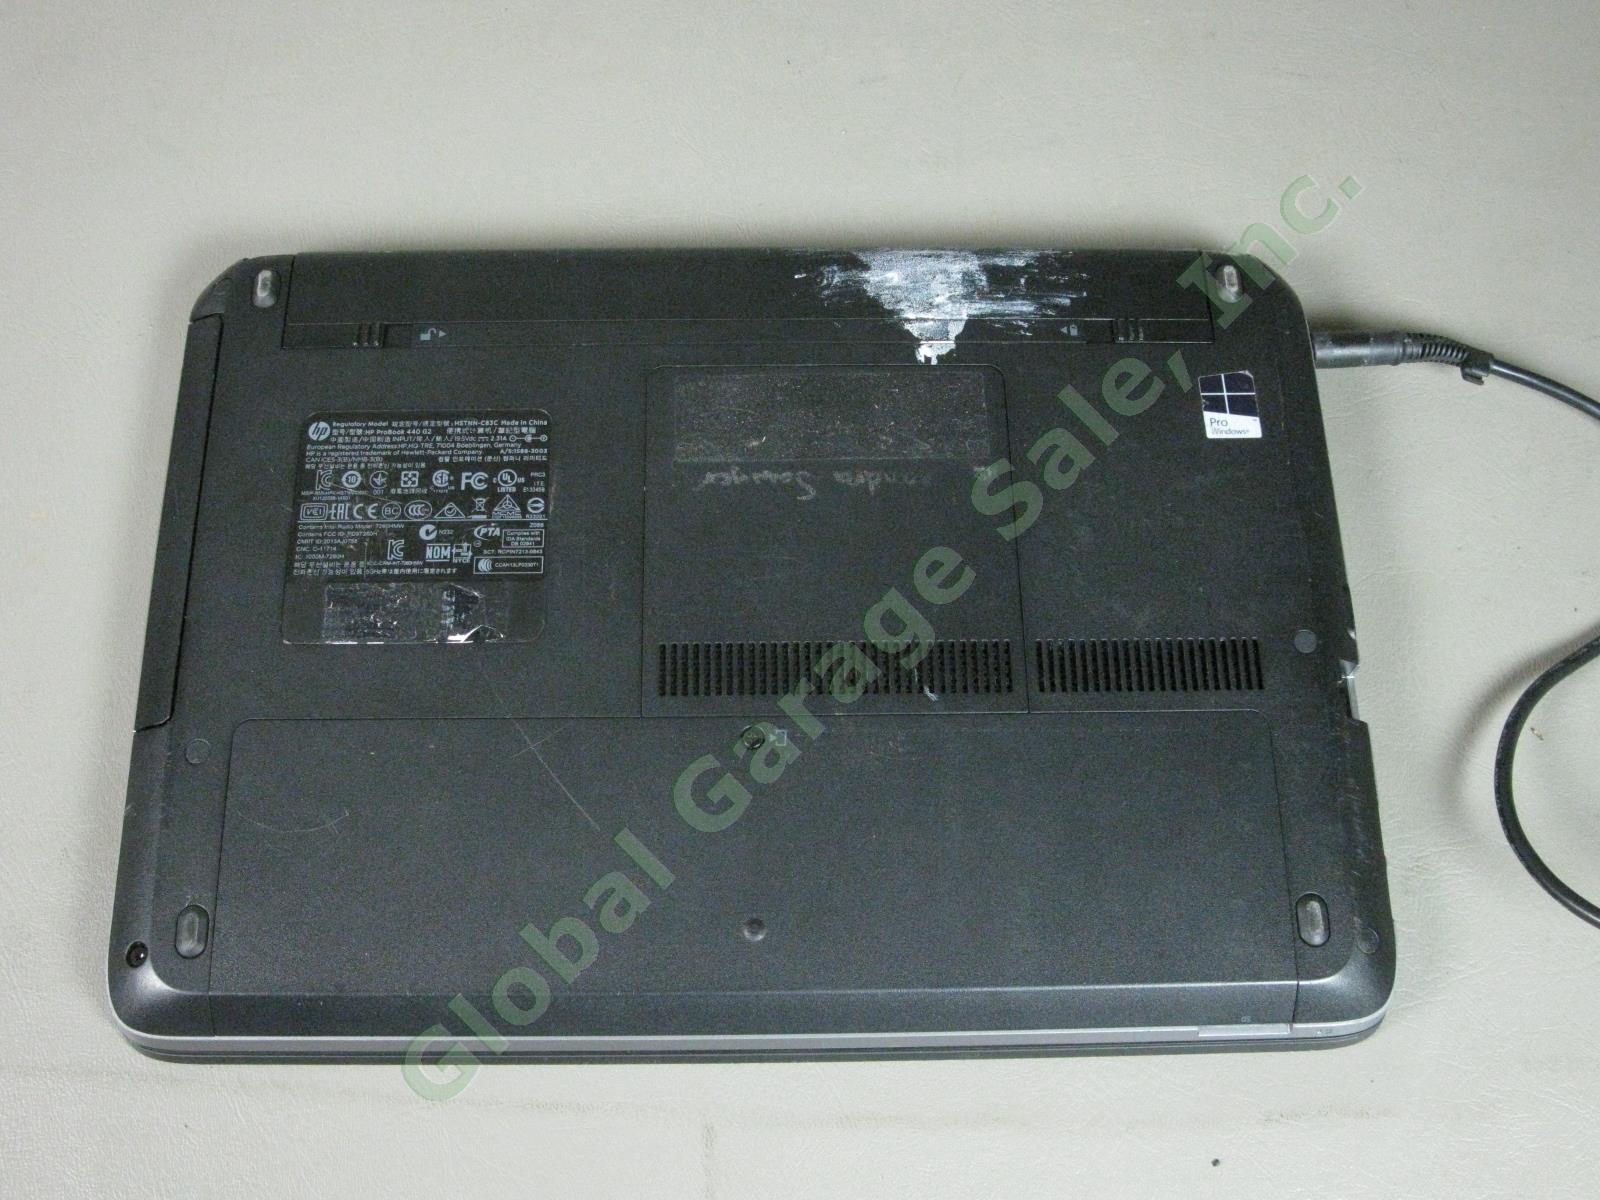 HP ProBook Laptop 440 G2 i5-5200U 2.20GHz 4GB RAM 460GB HD Windows 10 Pro Refurb 8